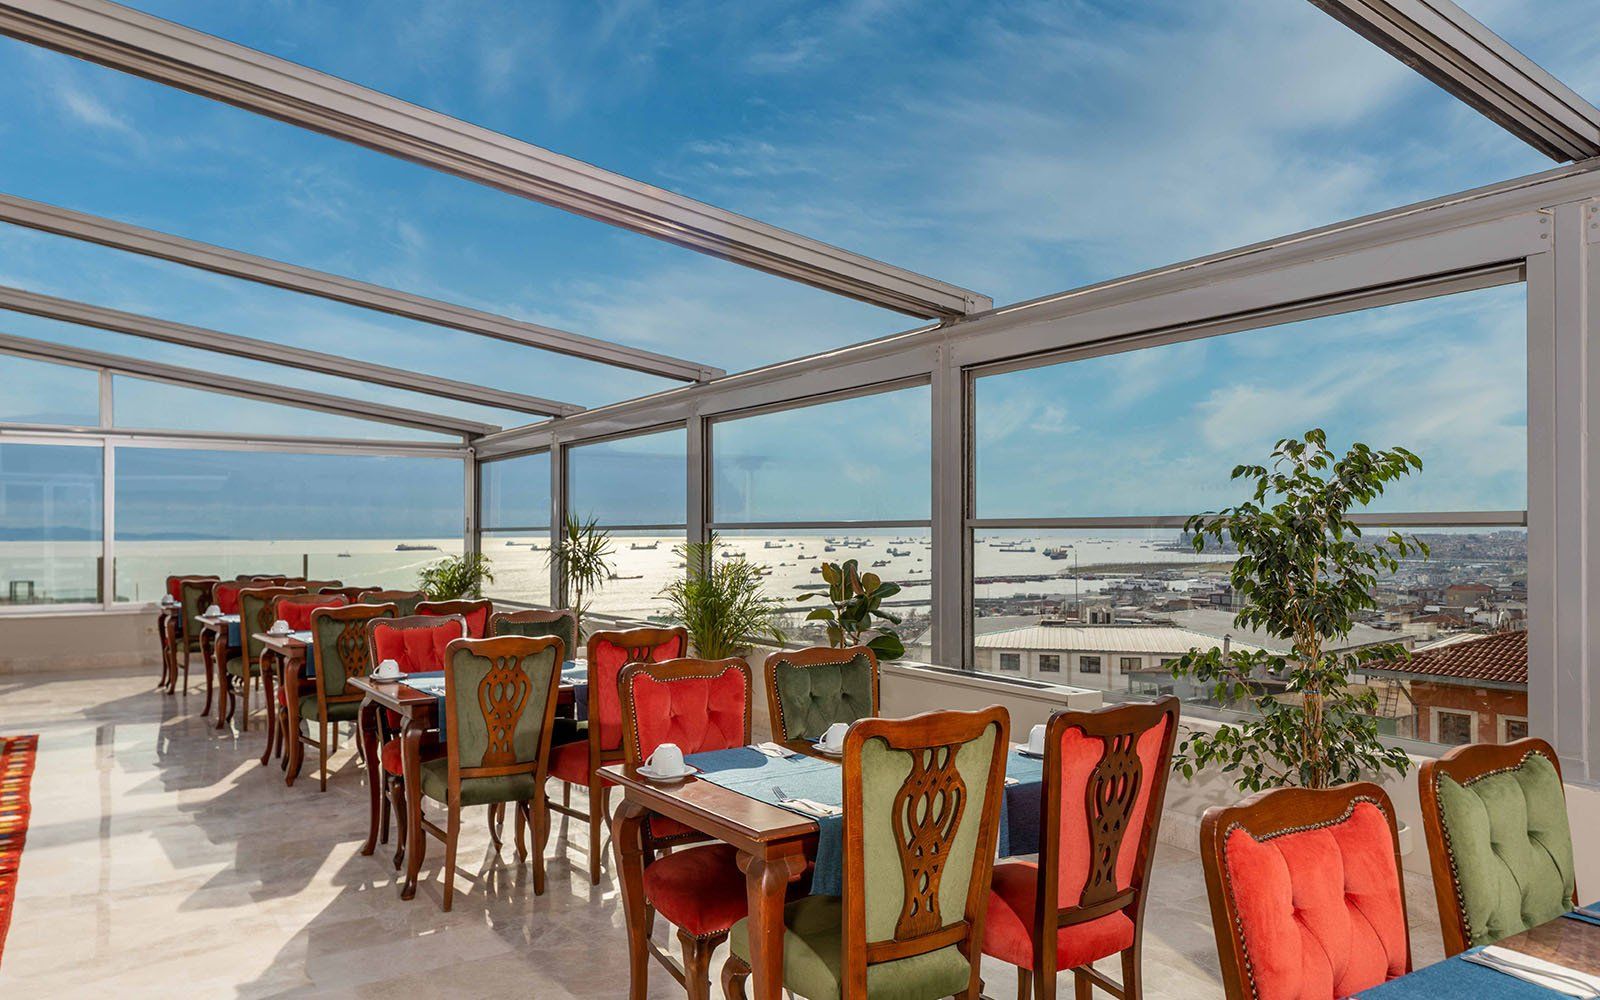 Sultanhan Hotel İstanbul, Terrace Restaurant